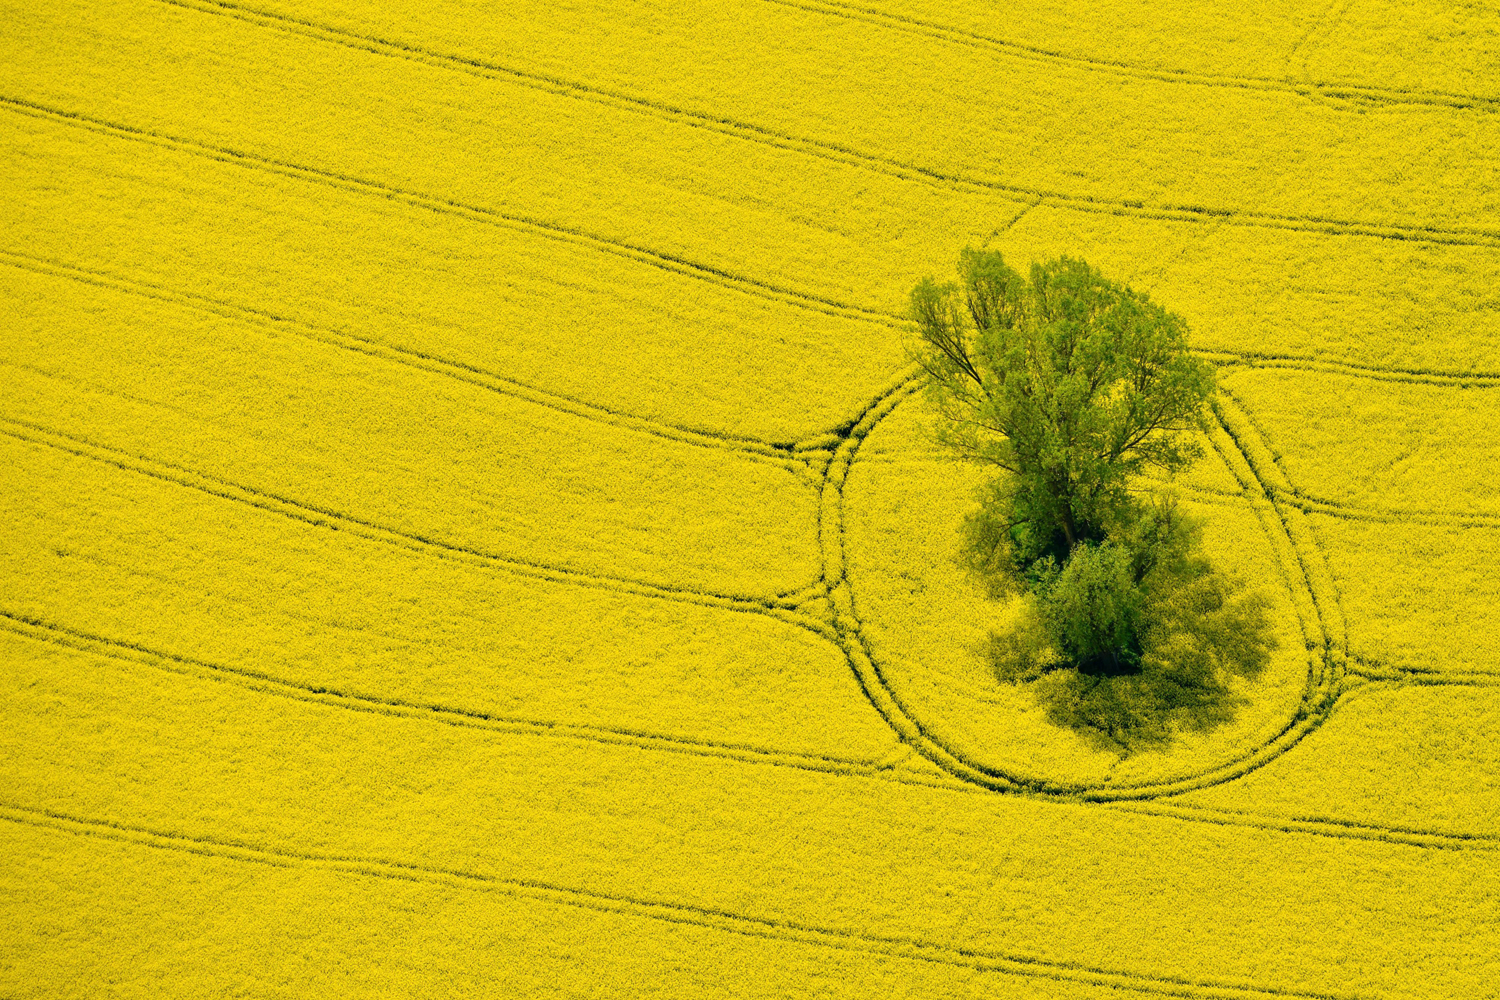 Aerial image - agricultural fields in Brandenburg